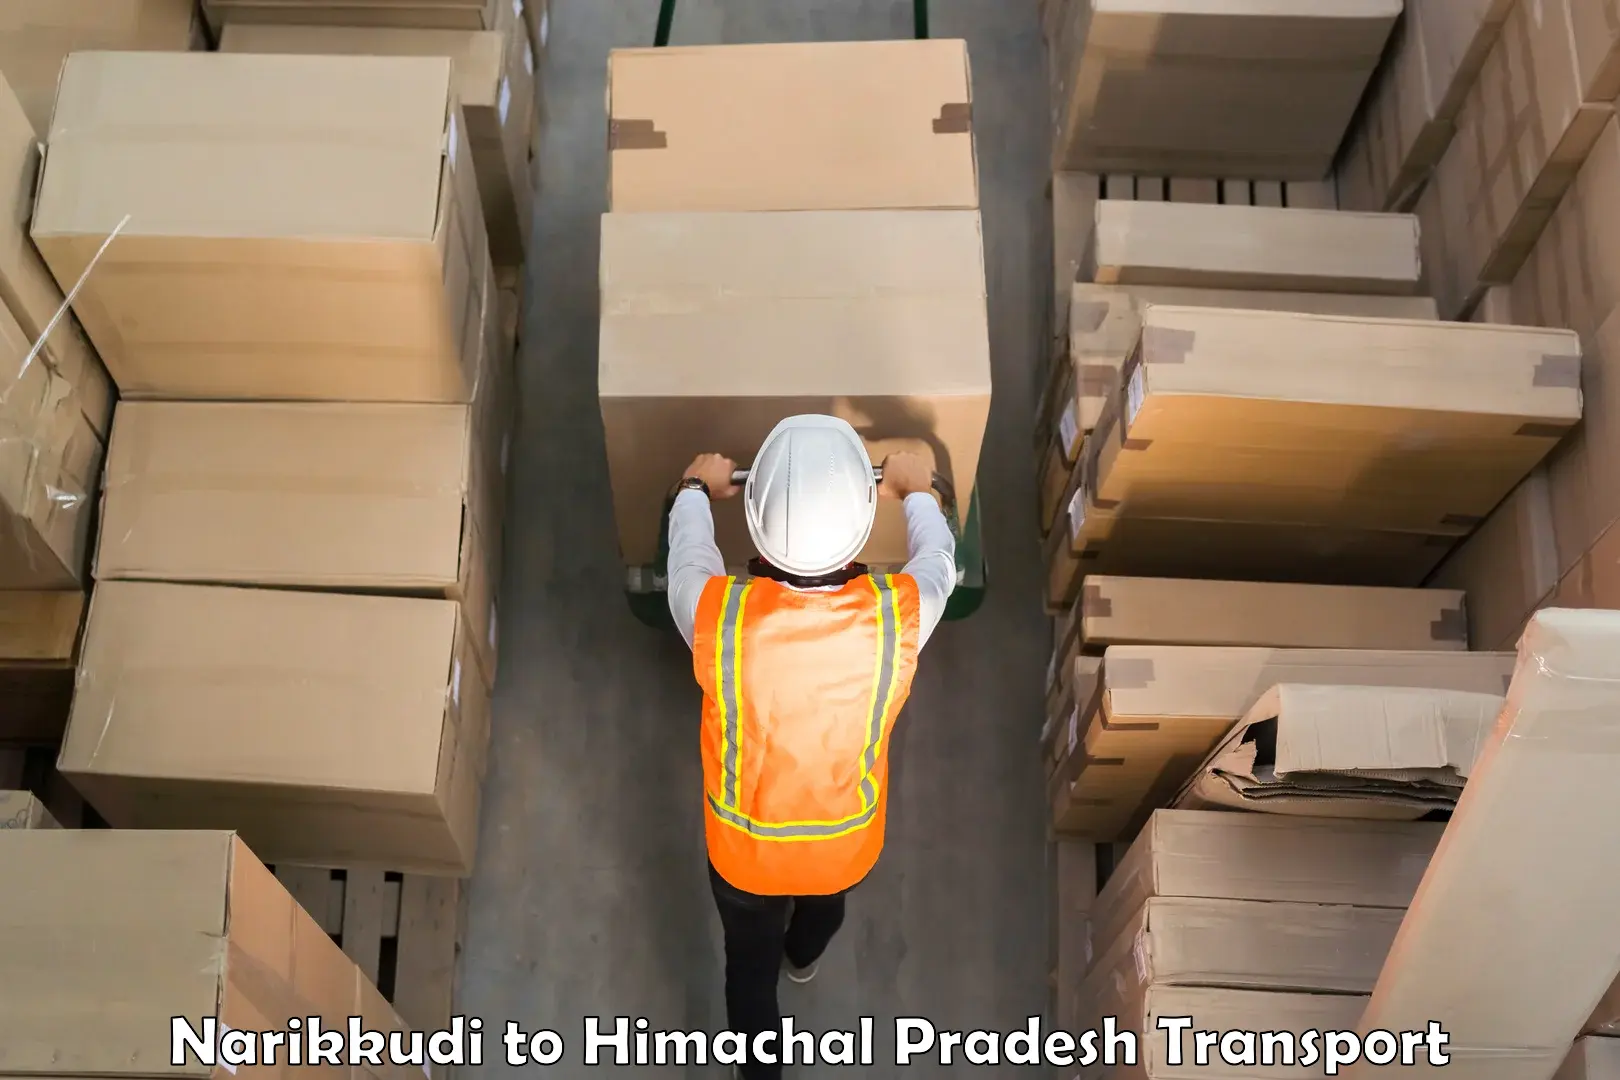 Truck transport companies in India Narikkudi to Rakkar